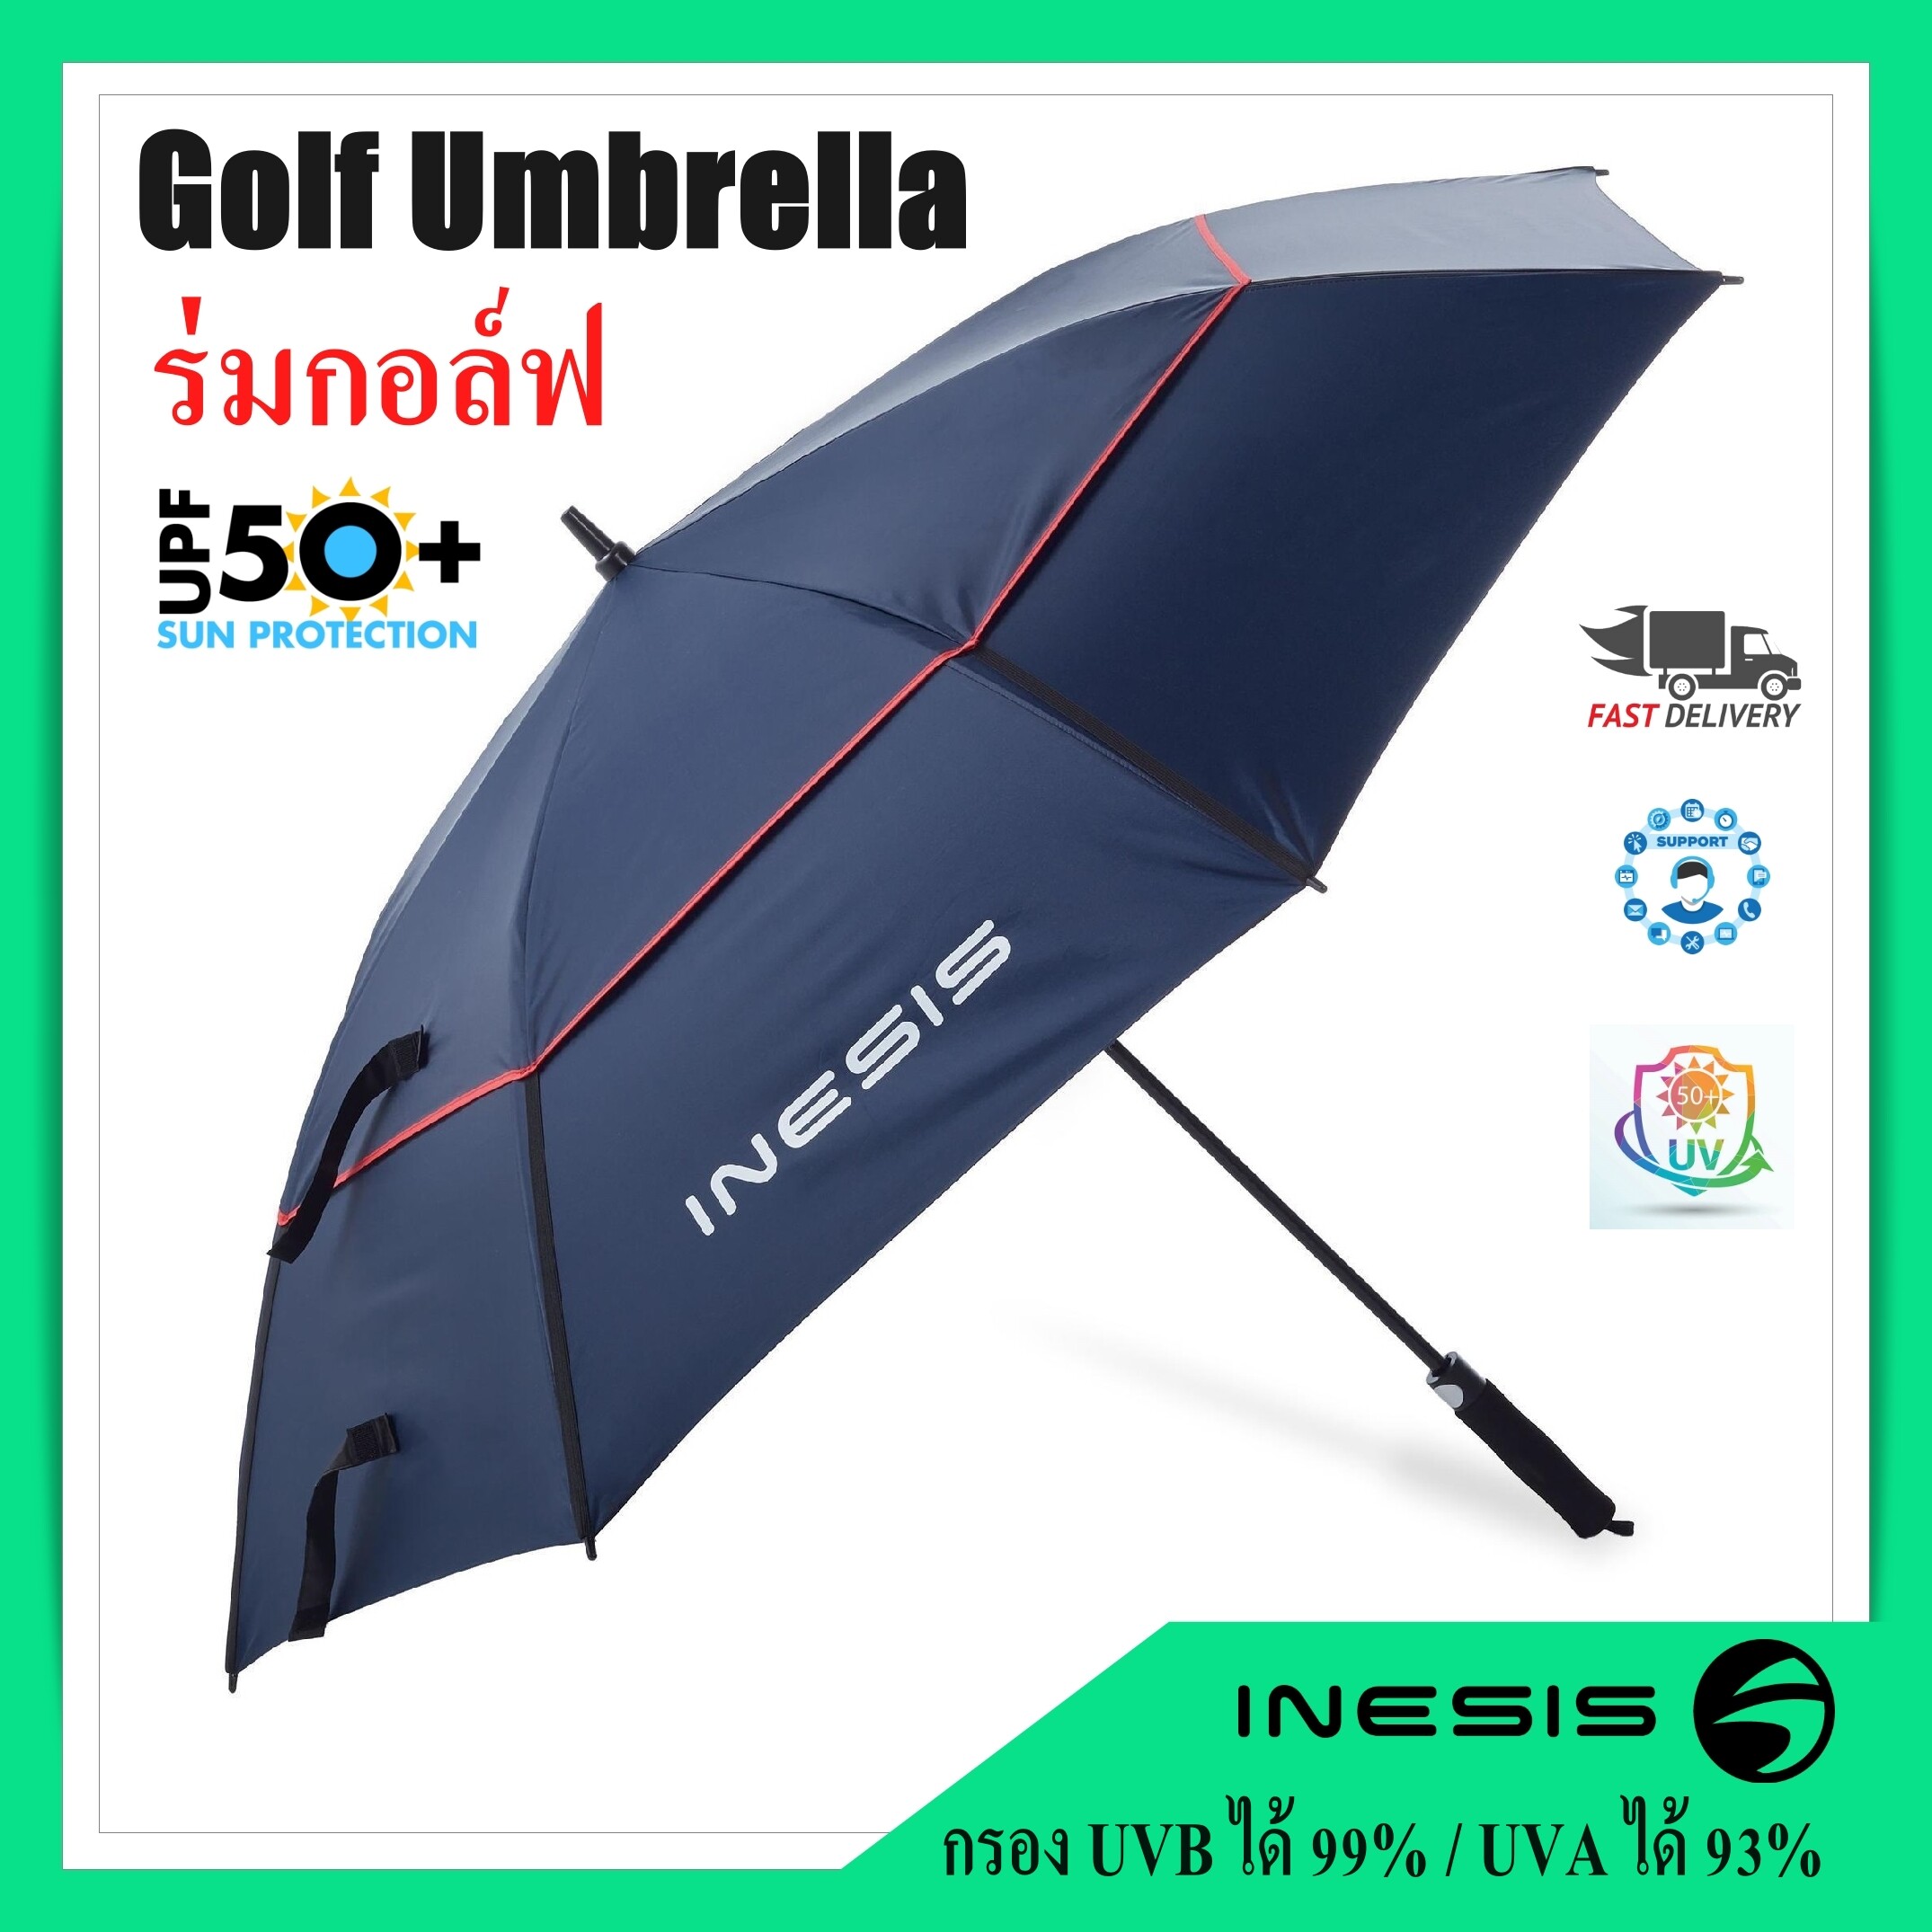 Golf Umbrella ร่มกอล์ฟ 2 ชั้น กันรังสี UV UPF 50+